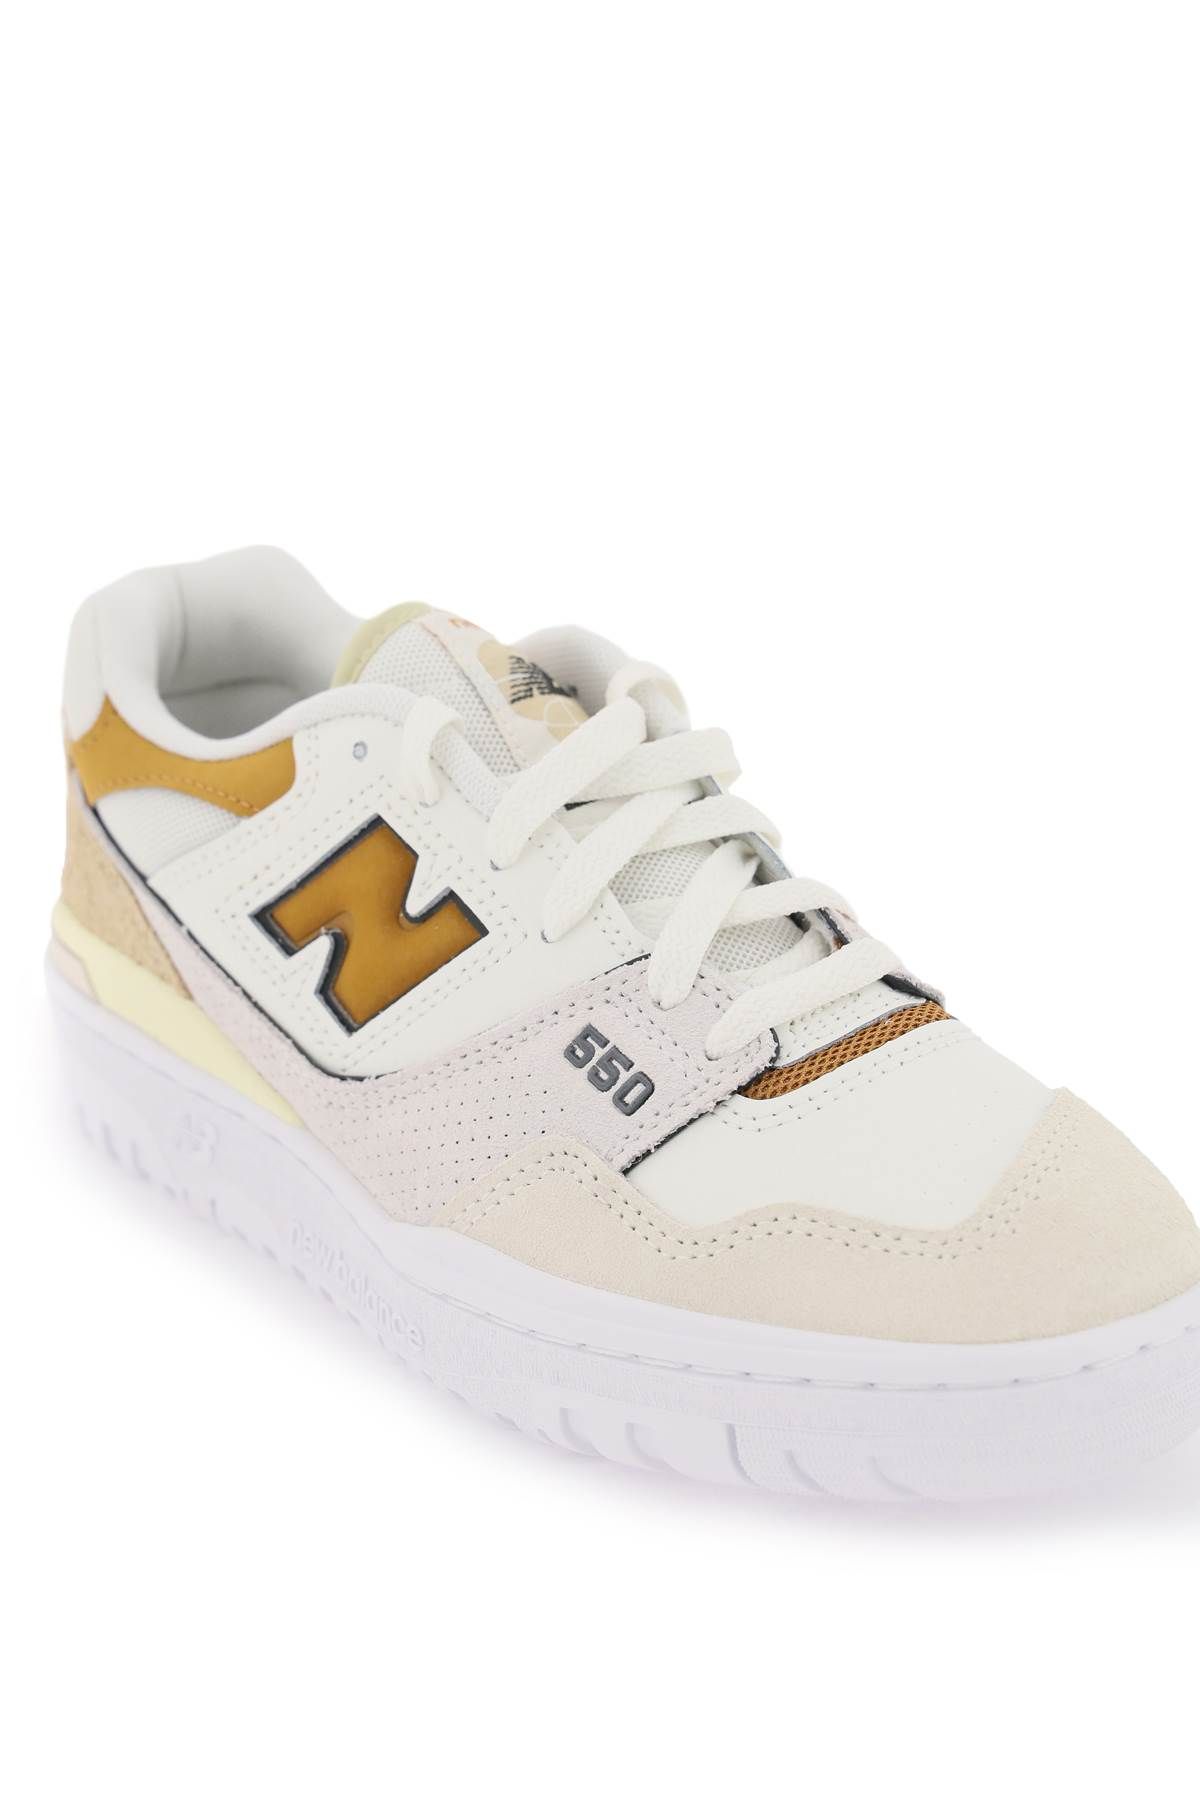 Shop New Balance 550 Sneakers In White,beige,orange